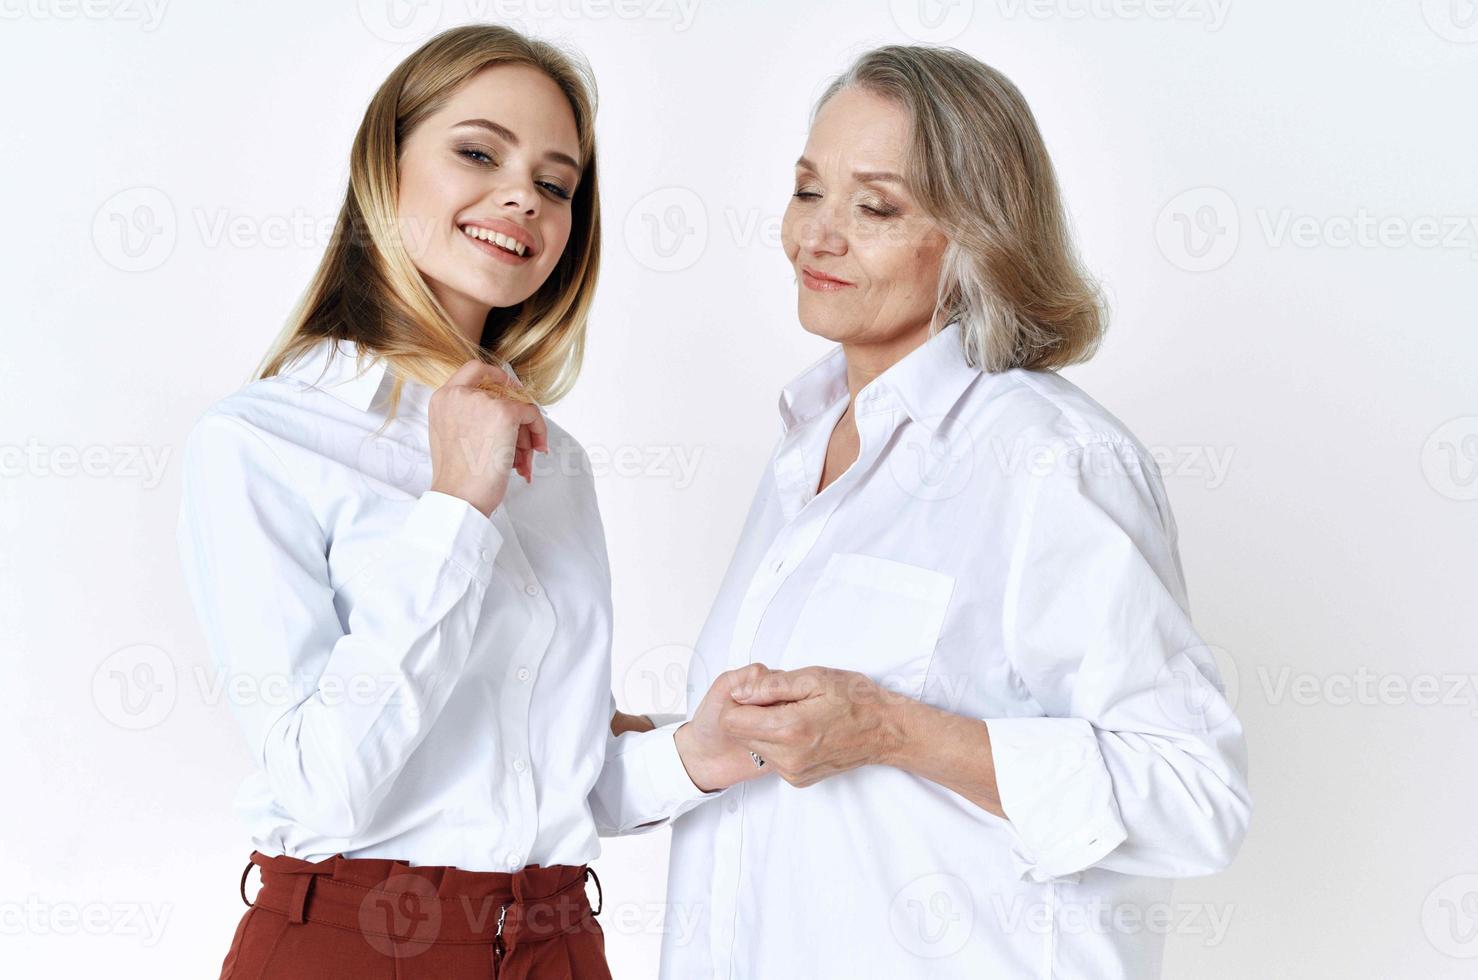 alegre mãe e filha dentro branco camisas abraço estilo de vida foto